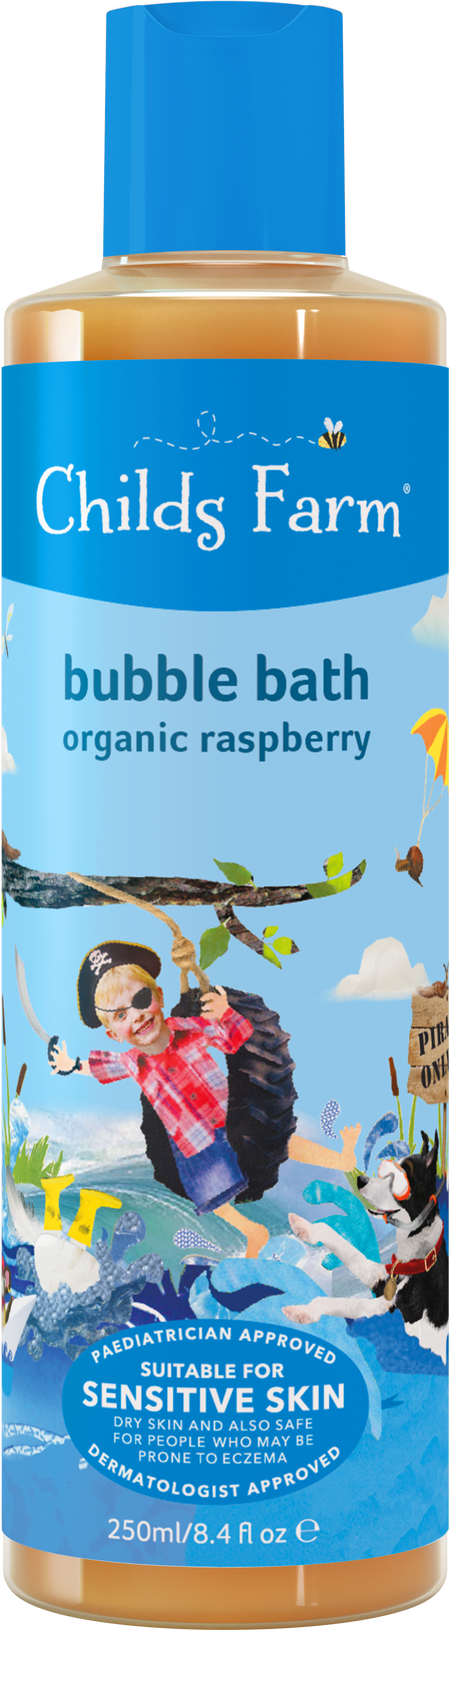 Childs Farm Organic Raspberry Bubble Bath 250ml